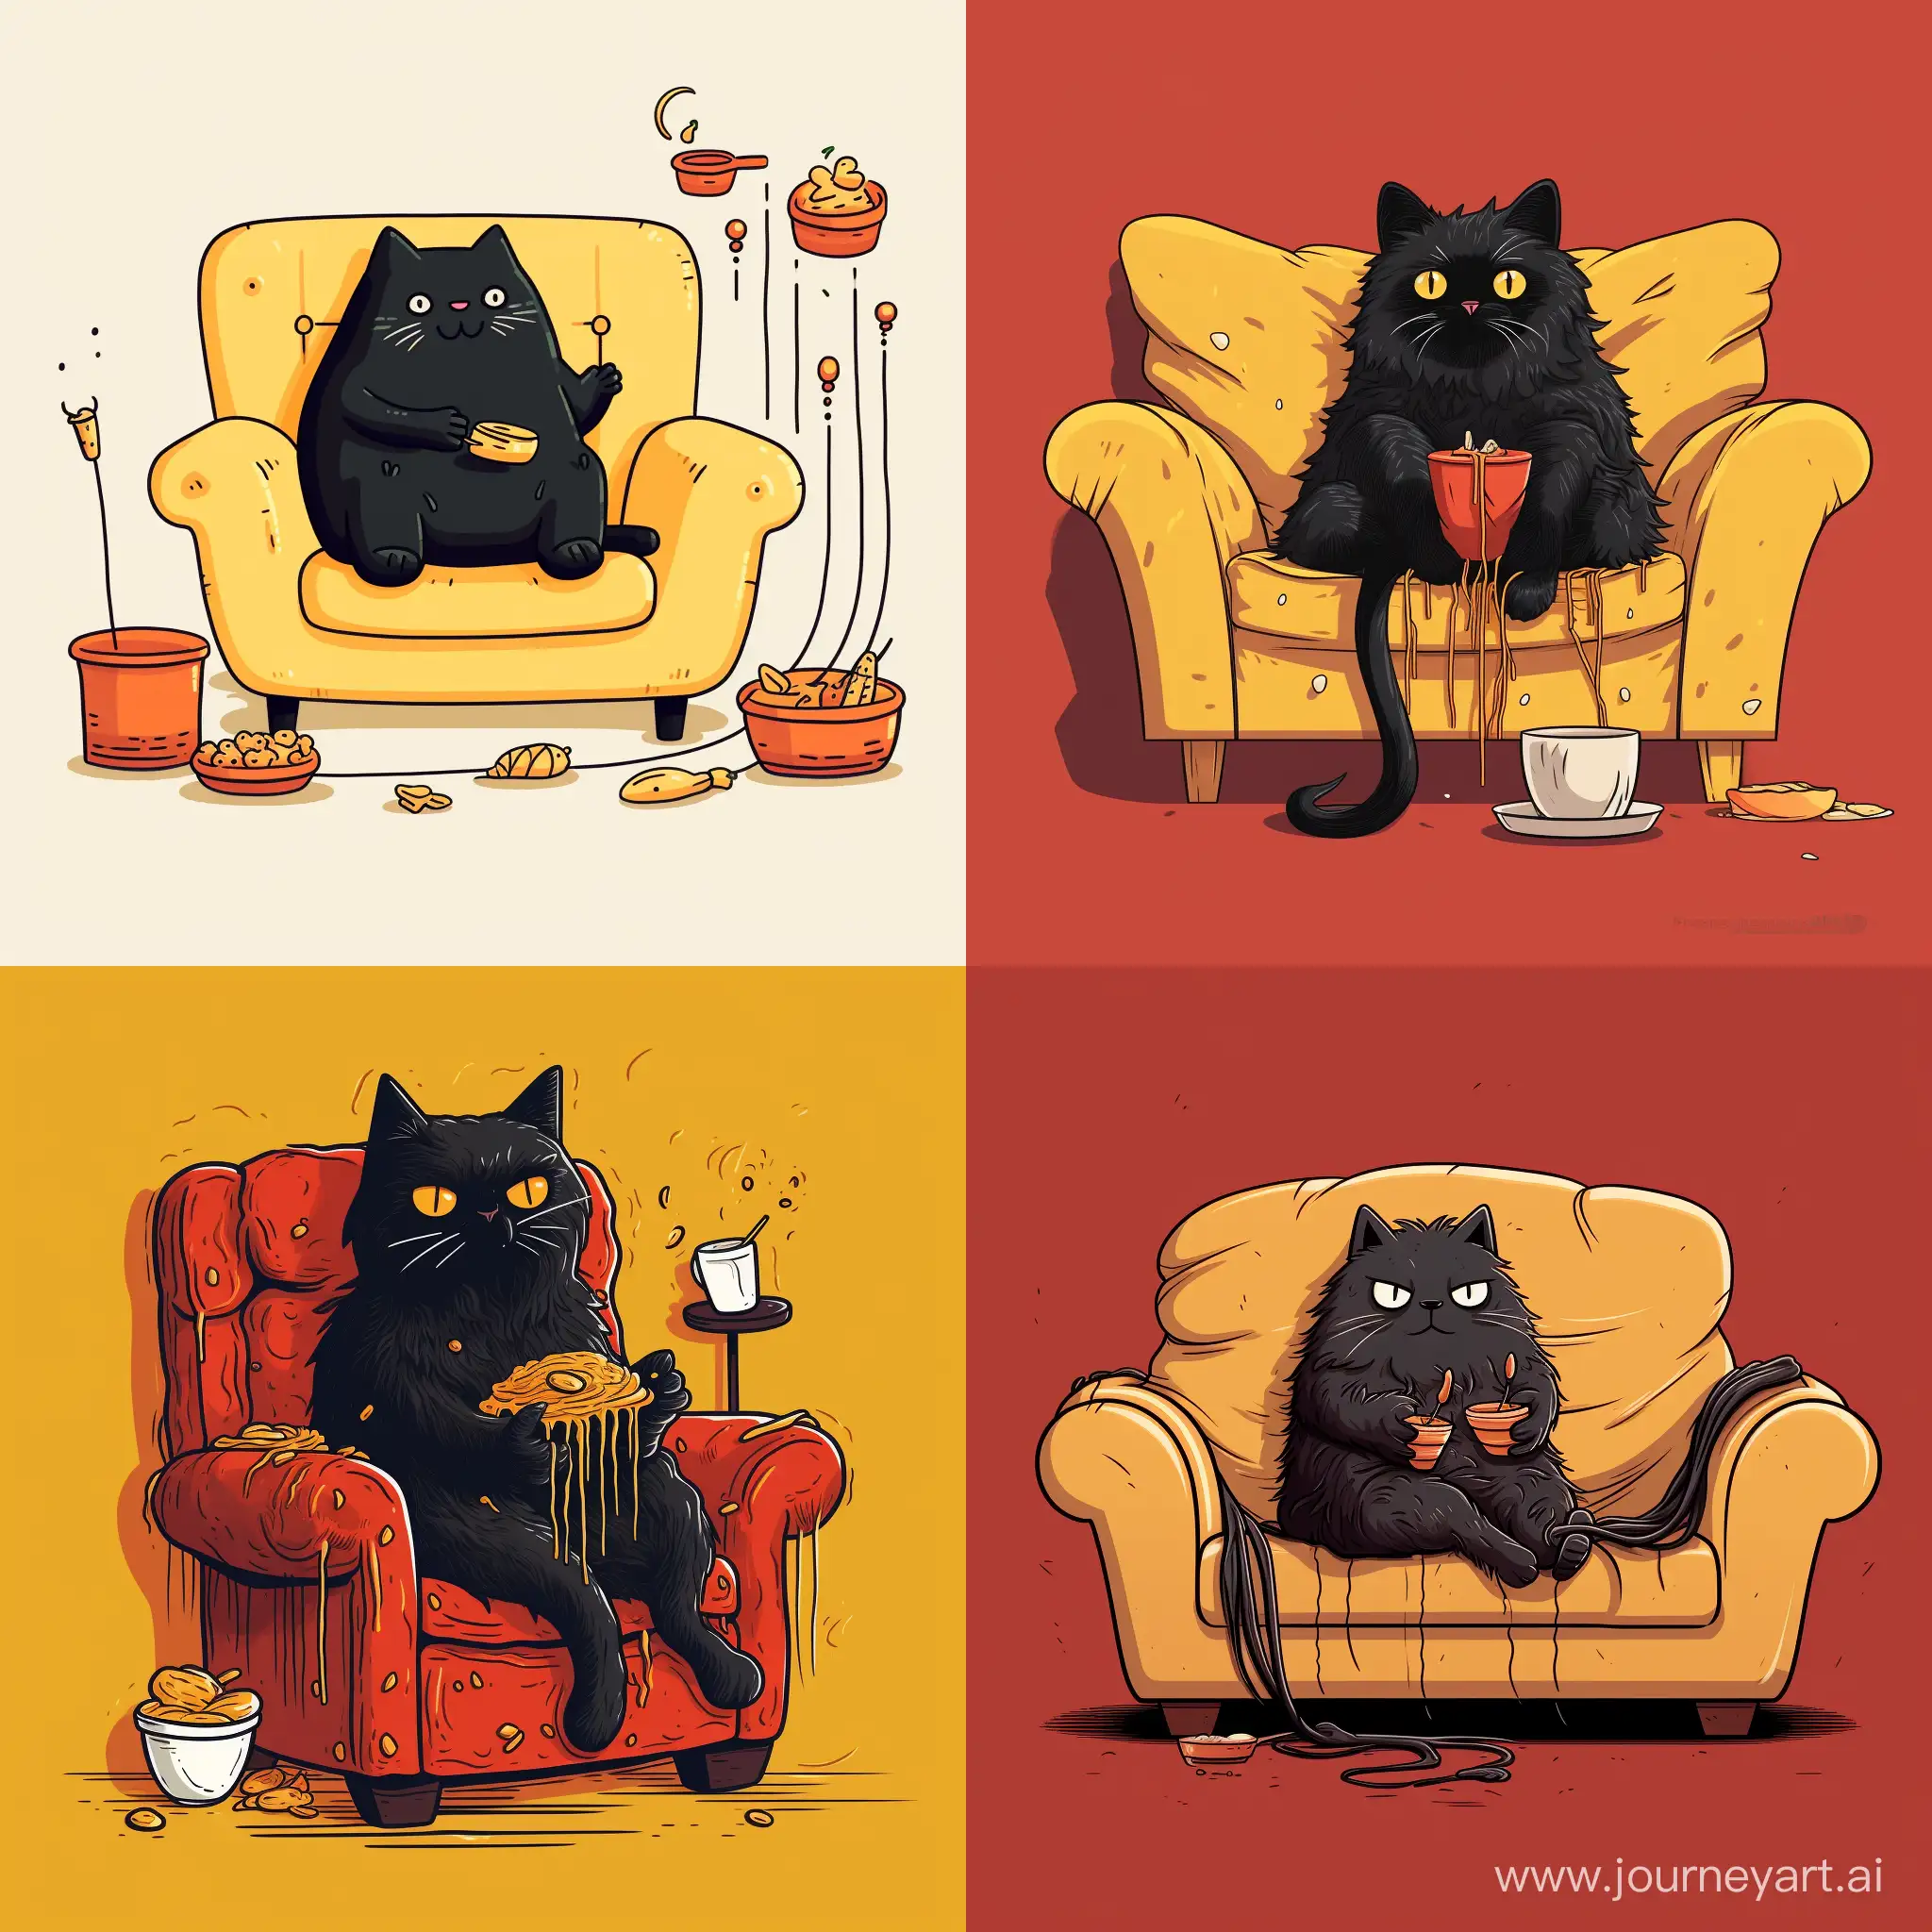 Playful-Black-Cat-Enjoying-Spaghetti-on-a-Cozy-Couch